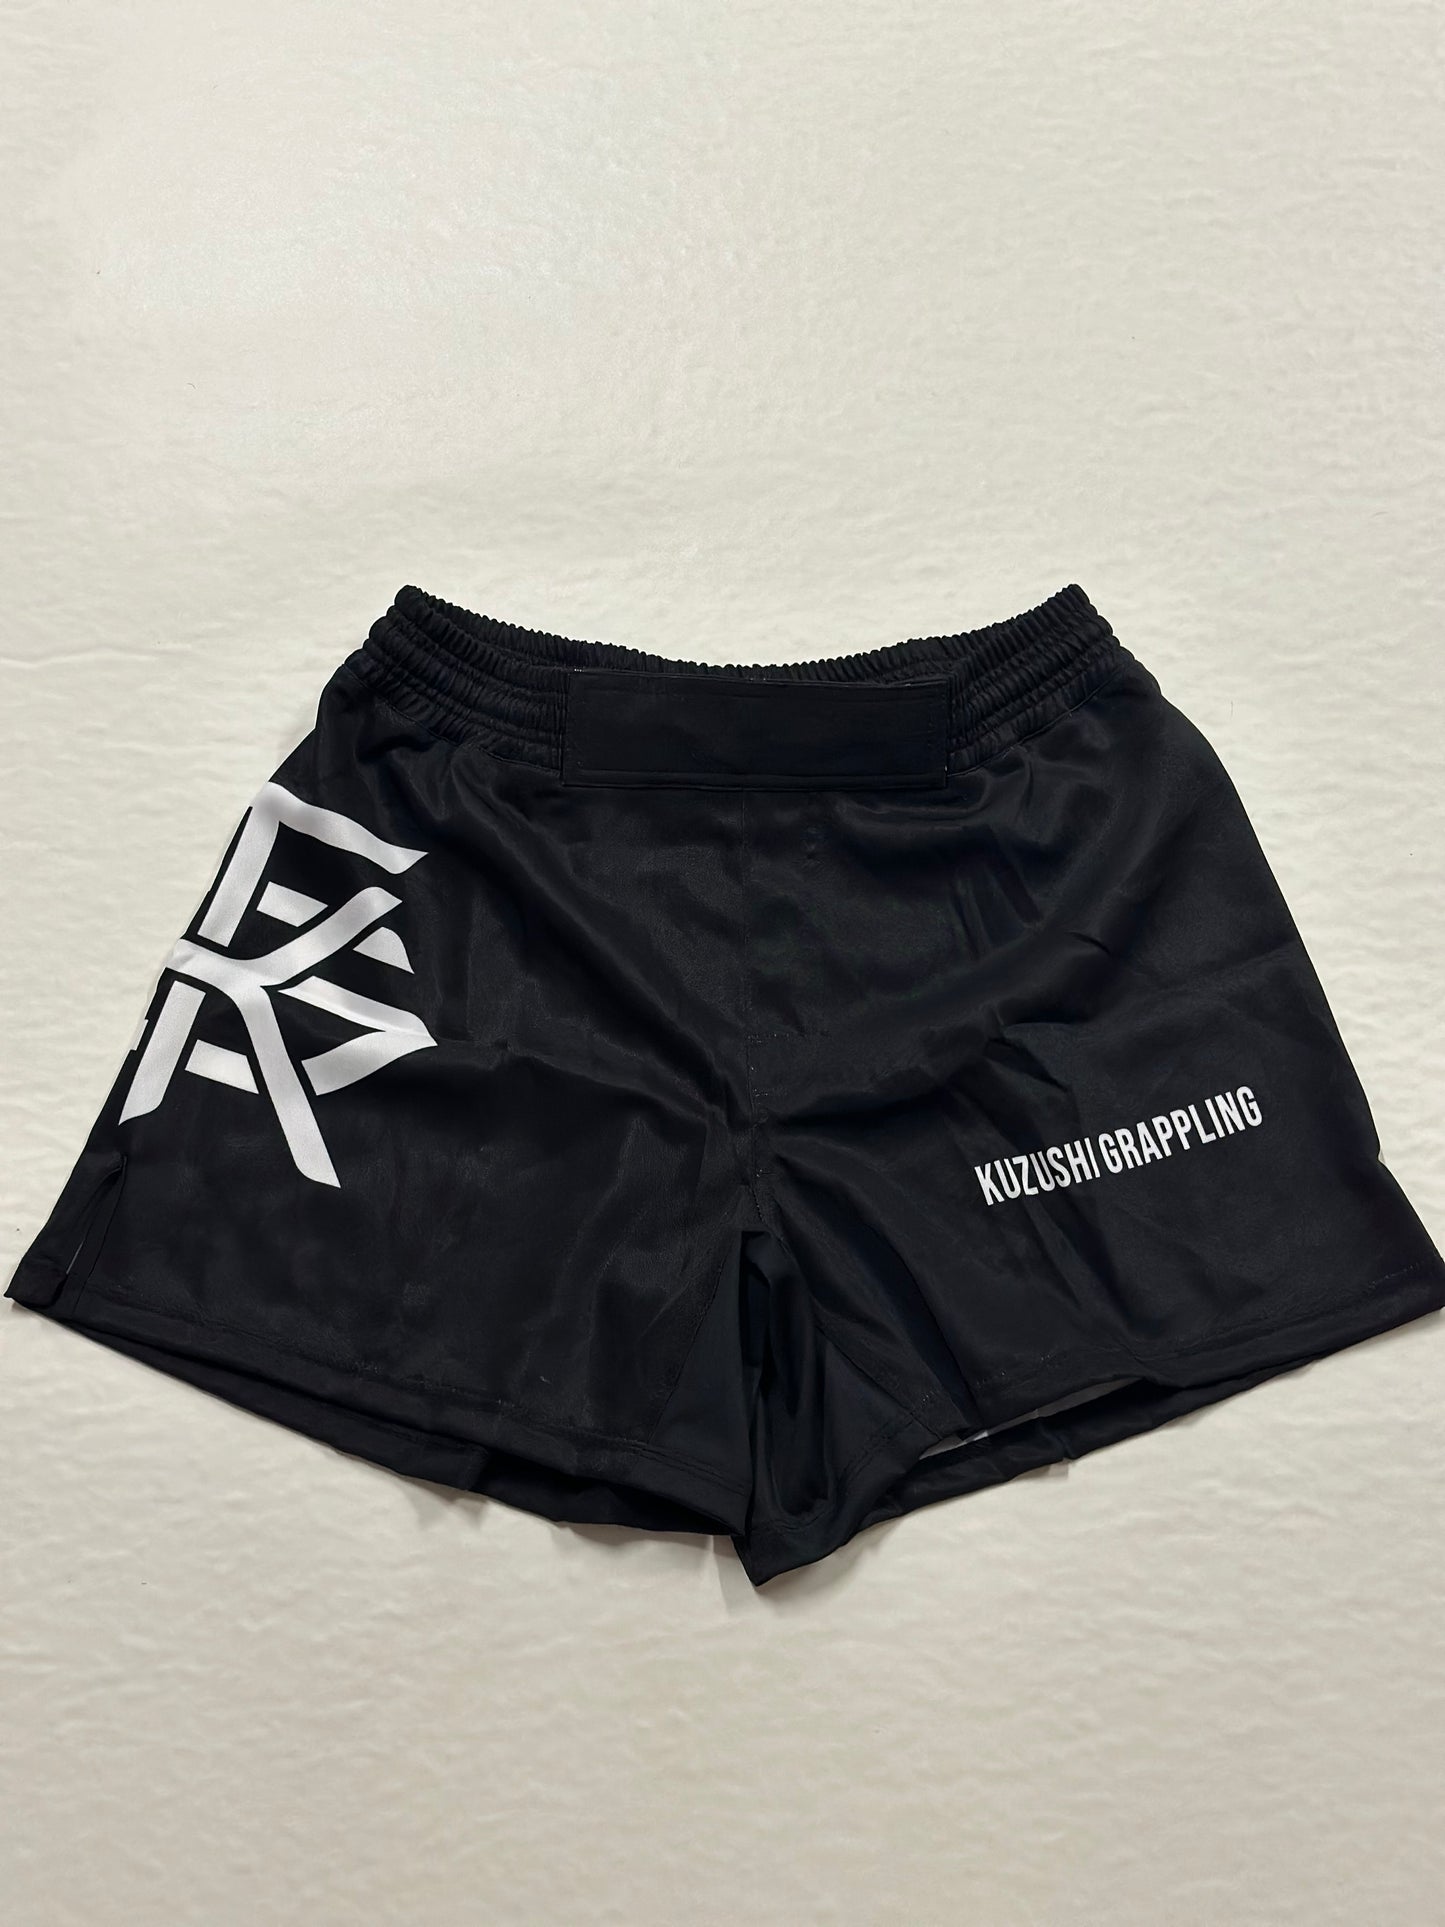 Kuzushi Team Shorts